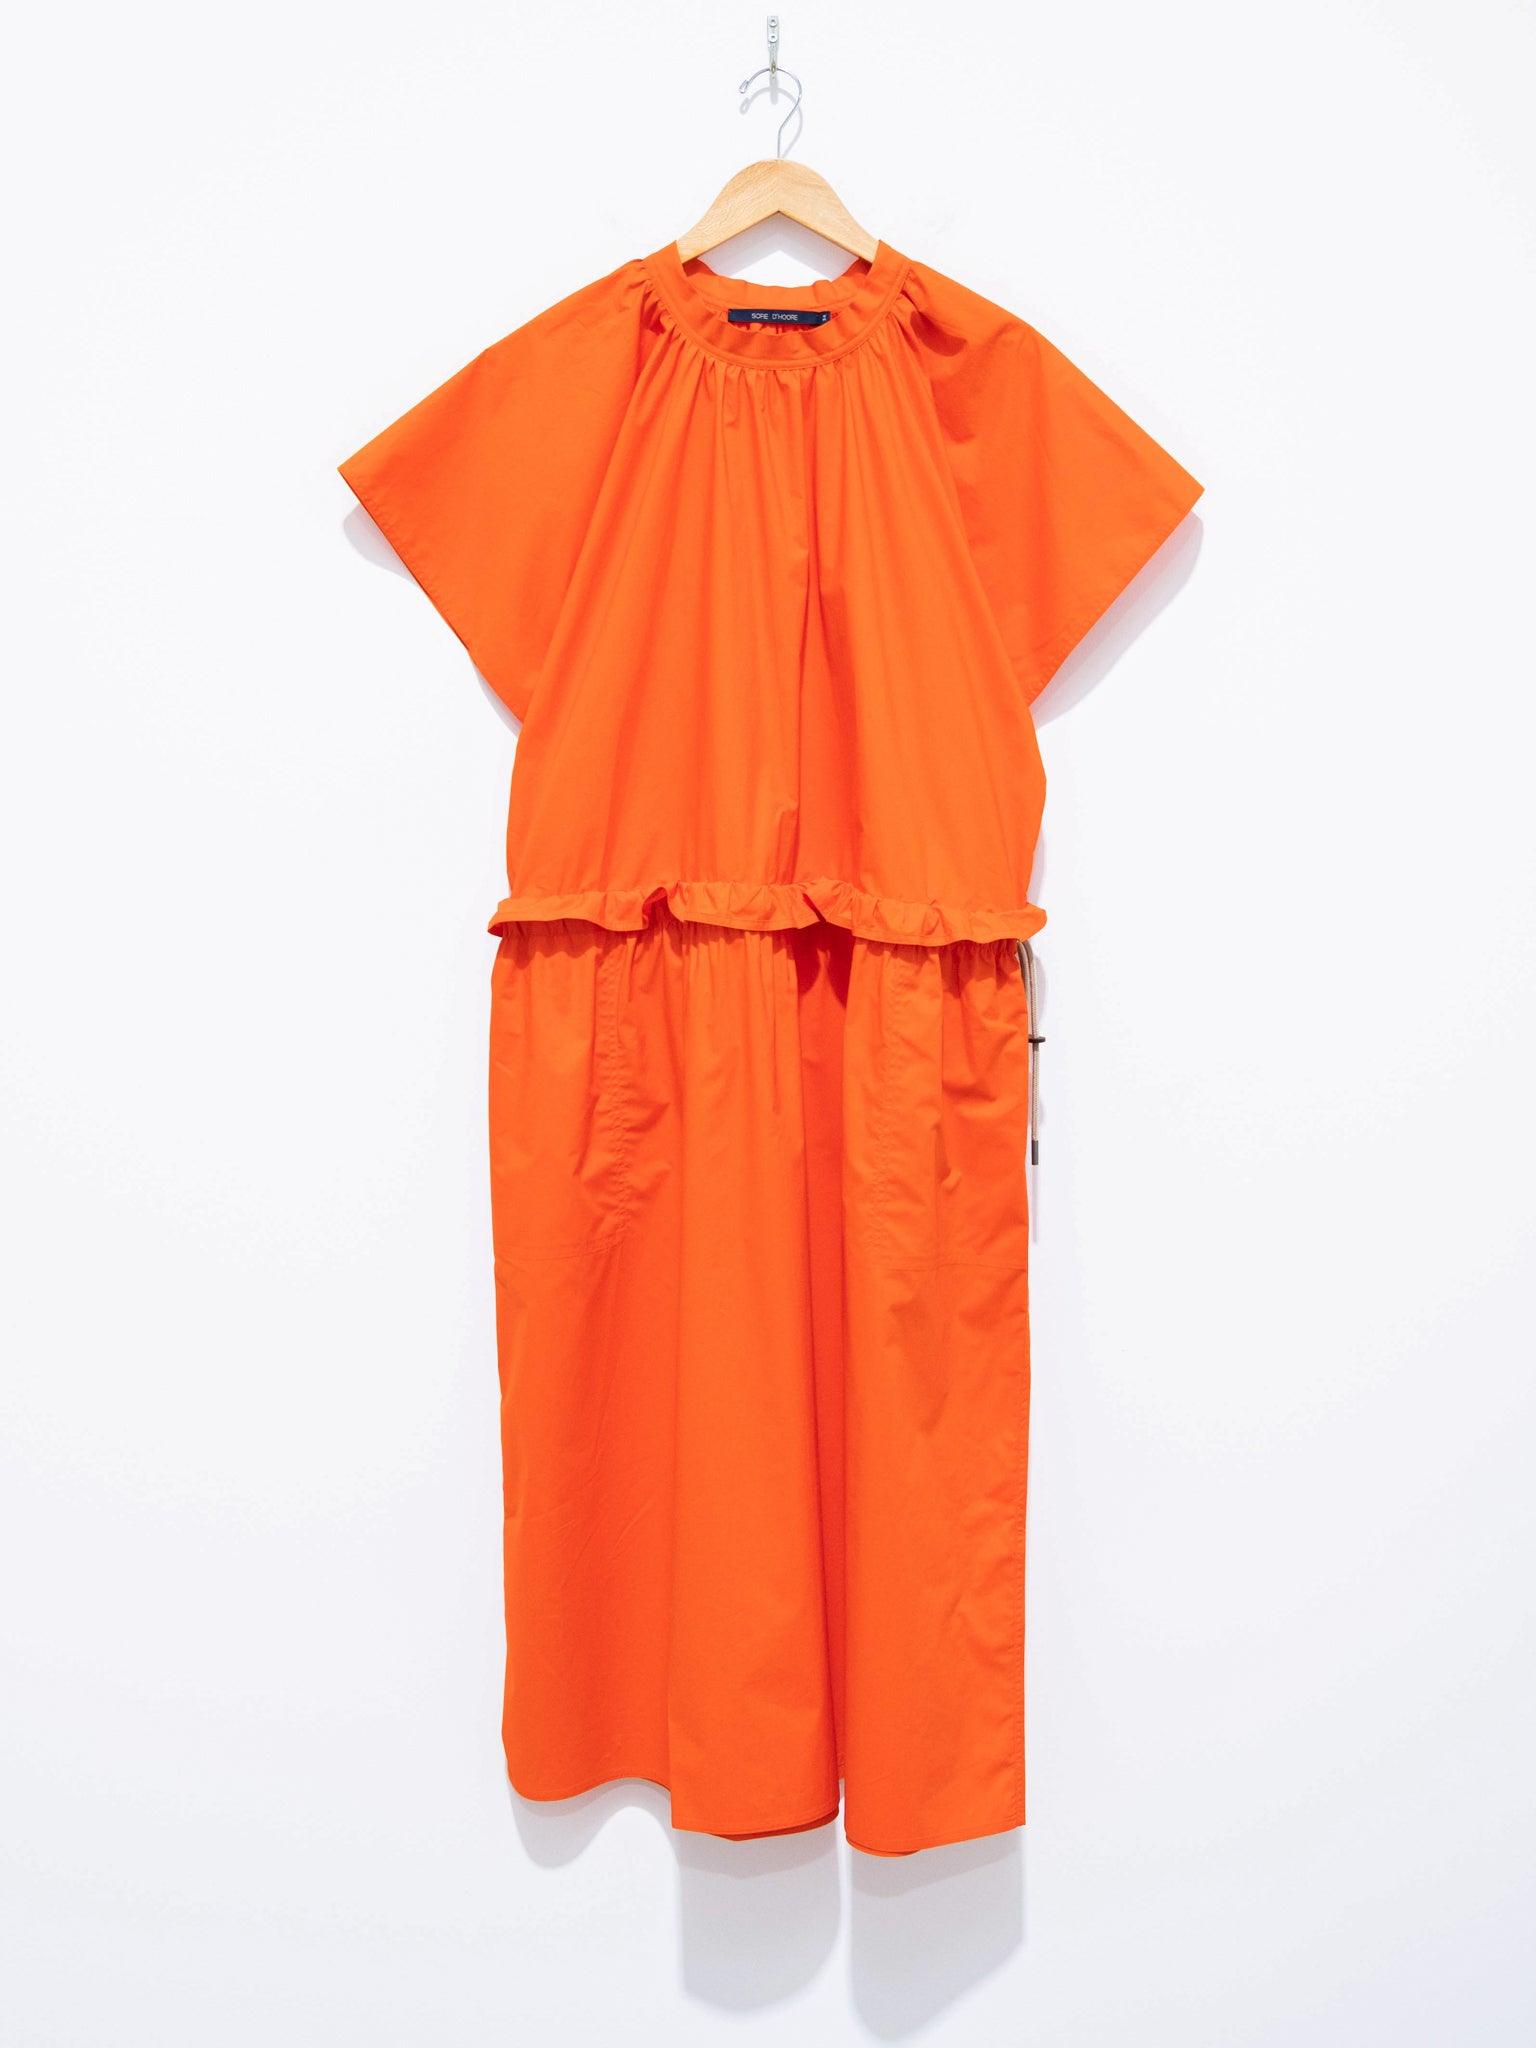 Namu Shop - Sofie D'Hoore Dhole Ruffle Dress - Tomato